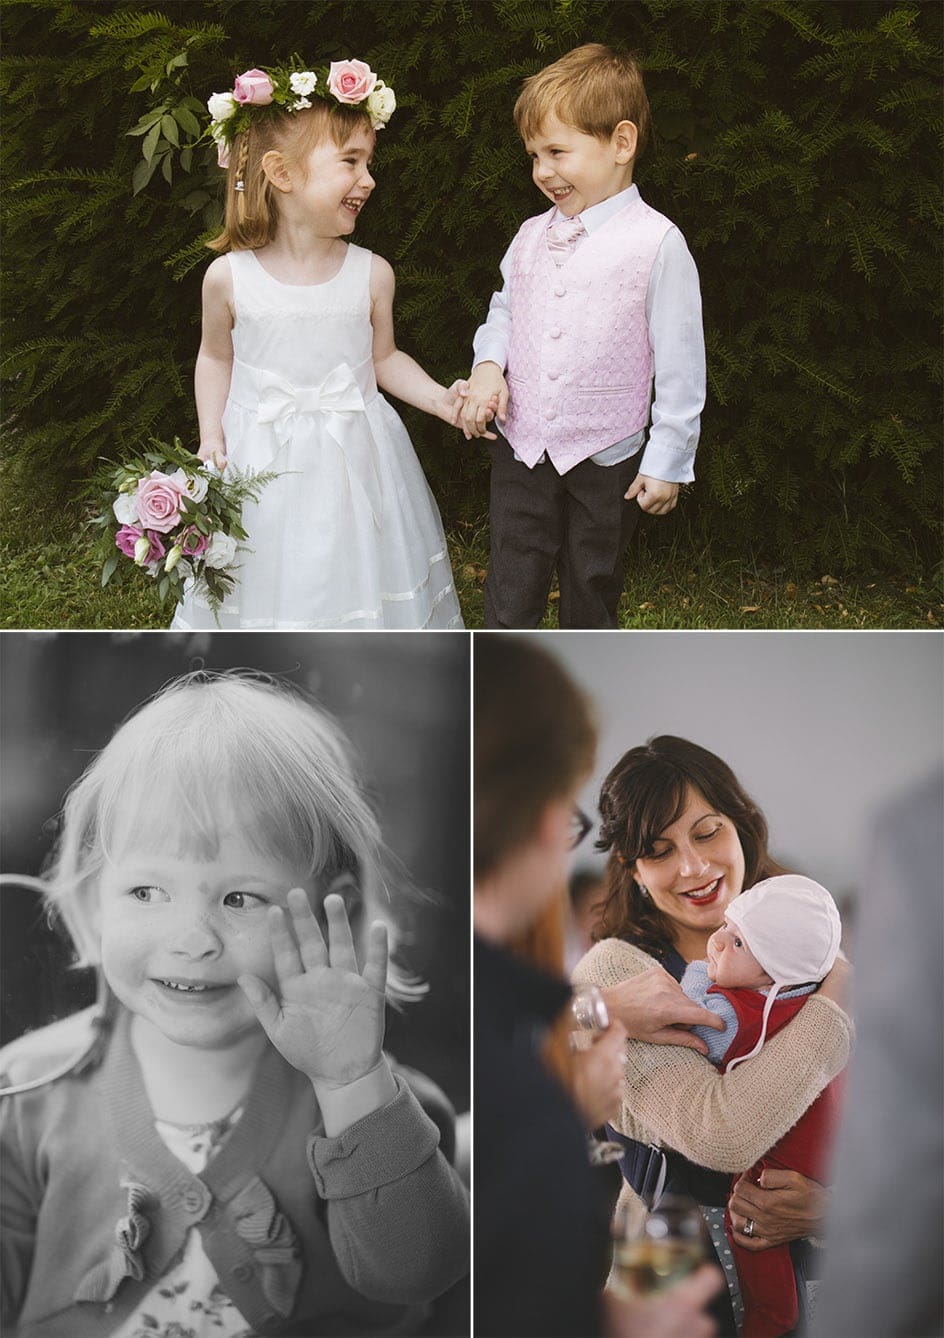 Kids-Children-Weddings-Photography-Fun-Cute-1